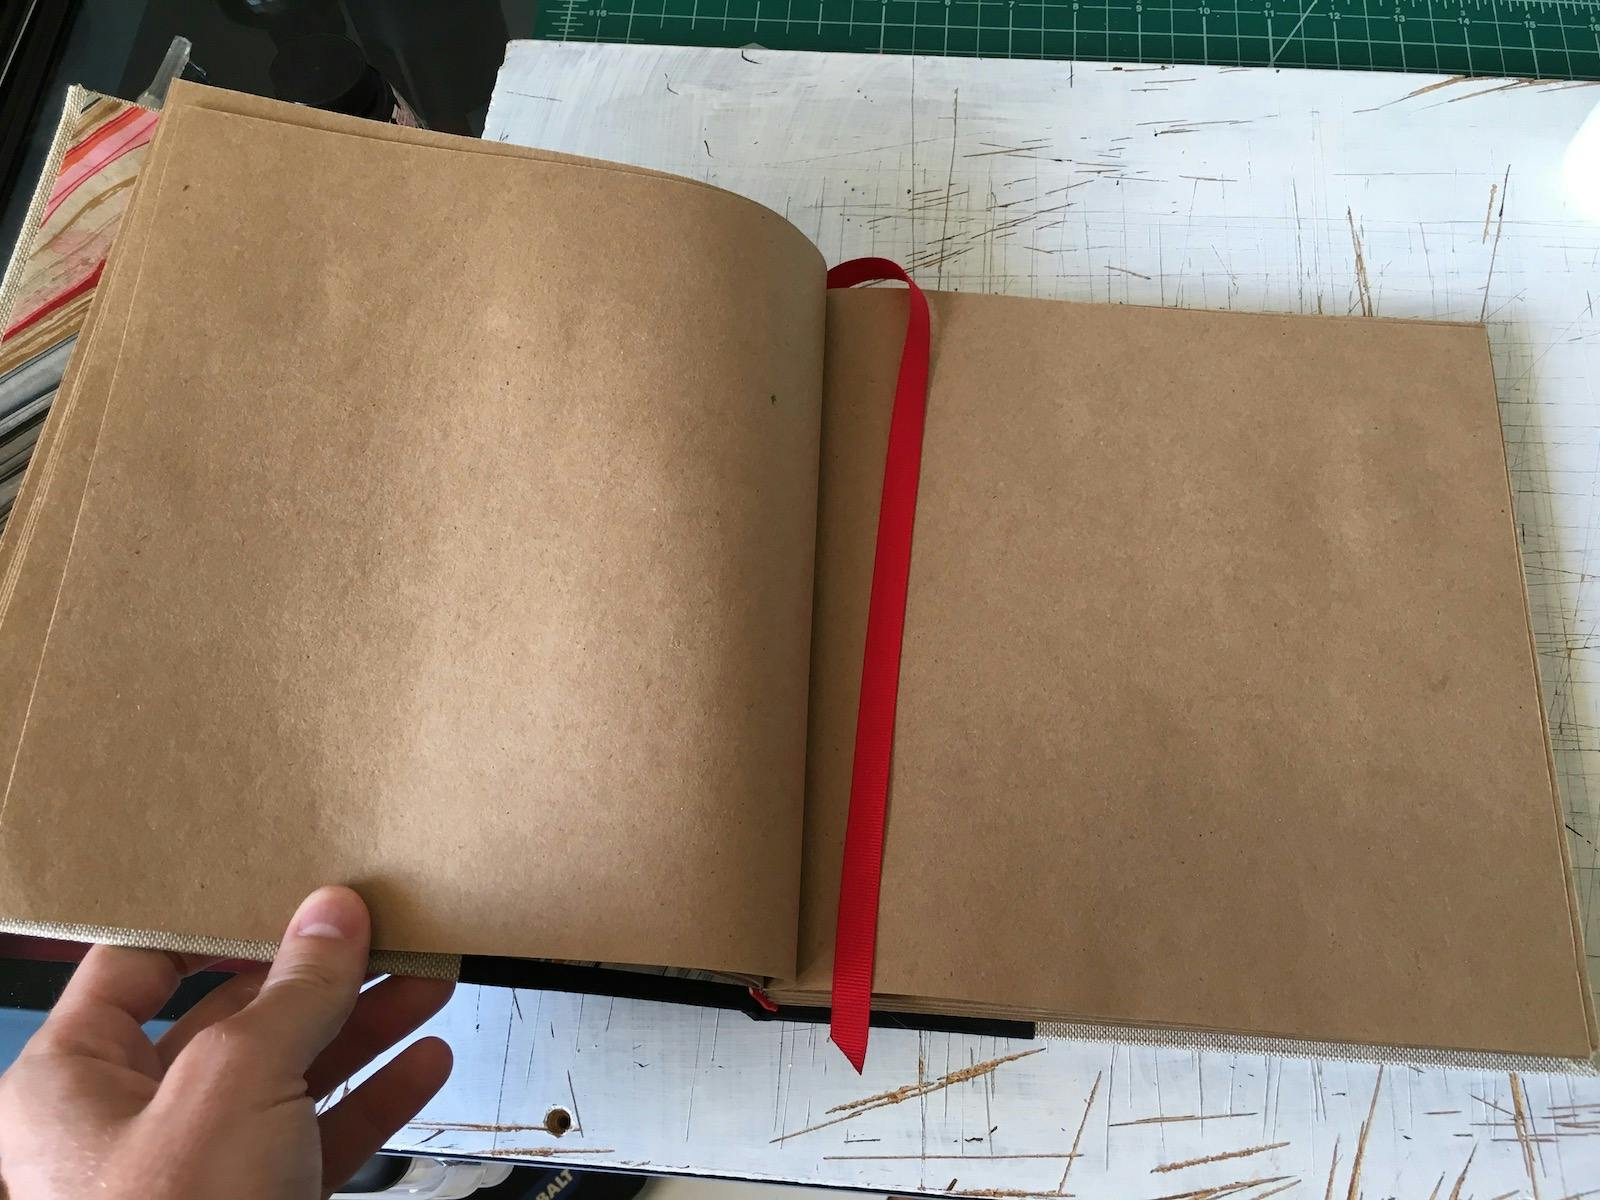 The finished sketchbook, open.